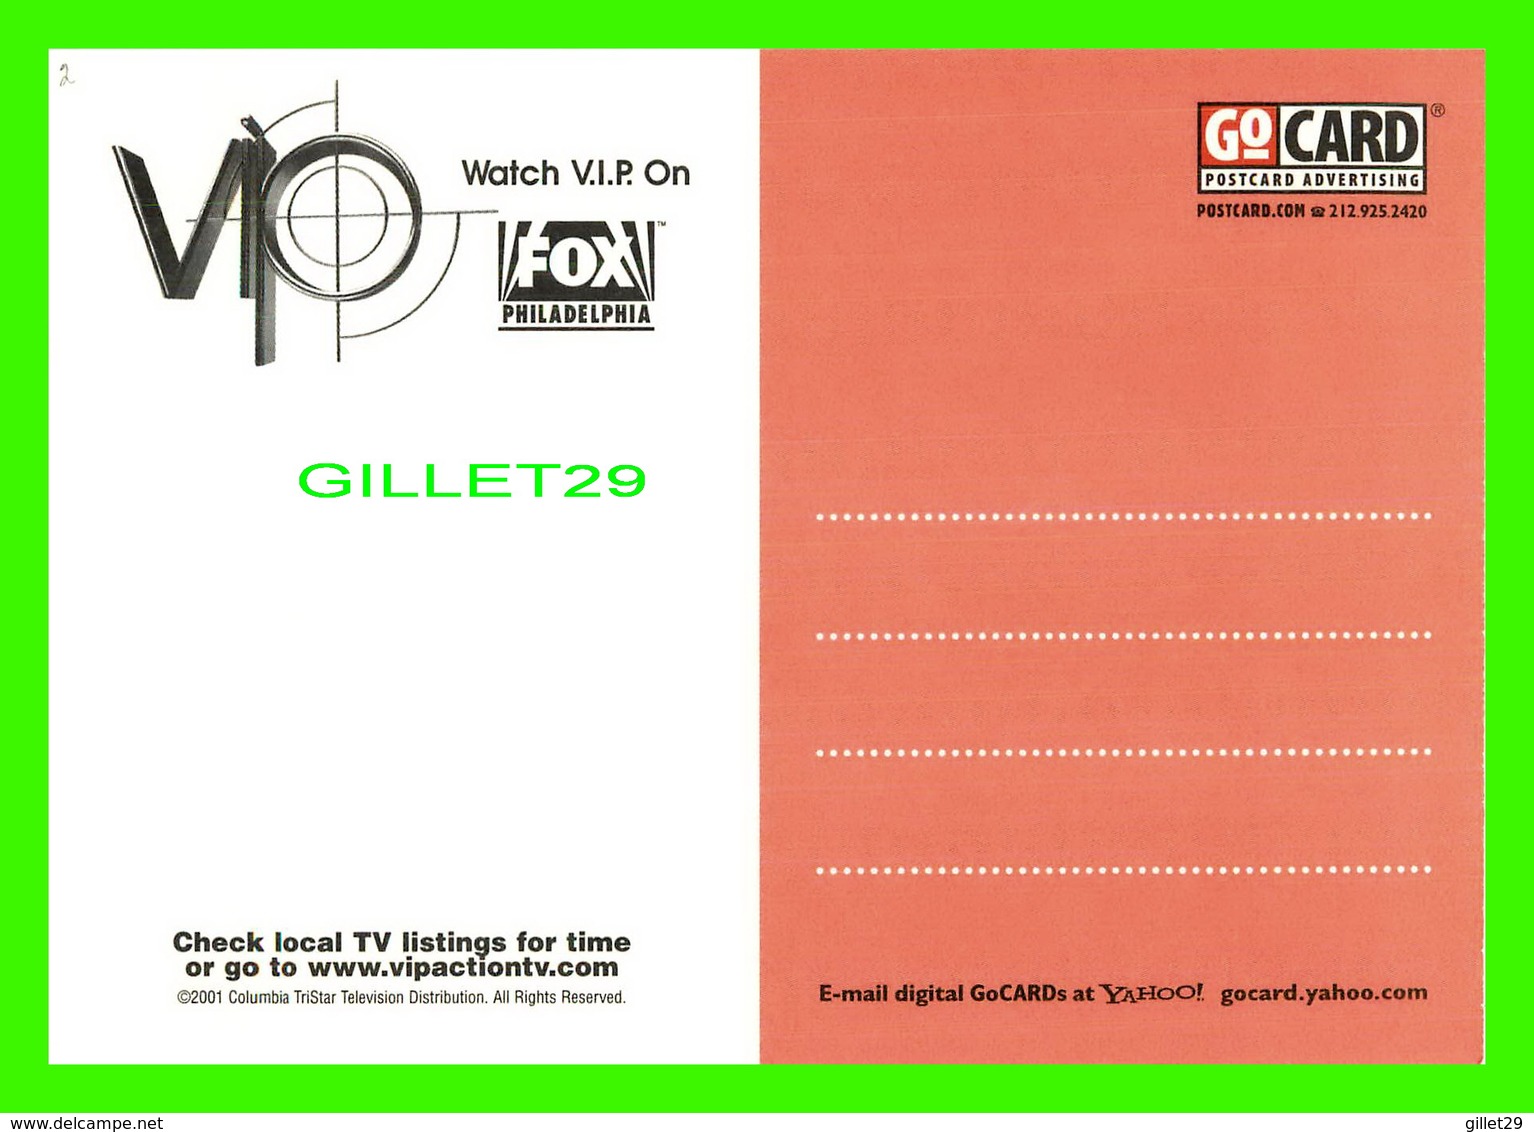 ADVERTISING, PUBLICITÉ - VIP STARRING PAMELA ANDERSON - WATCH IT ON FOX PHILADELPHIA IN 2001 - - Werbepostkarten